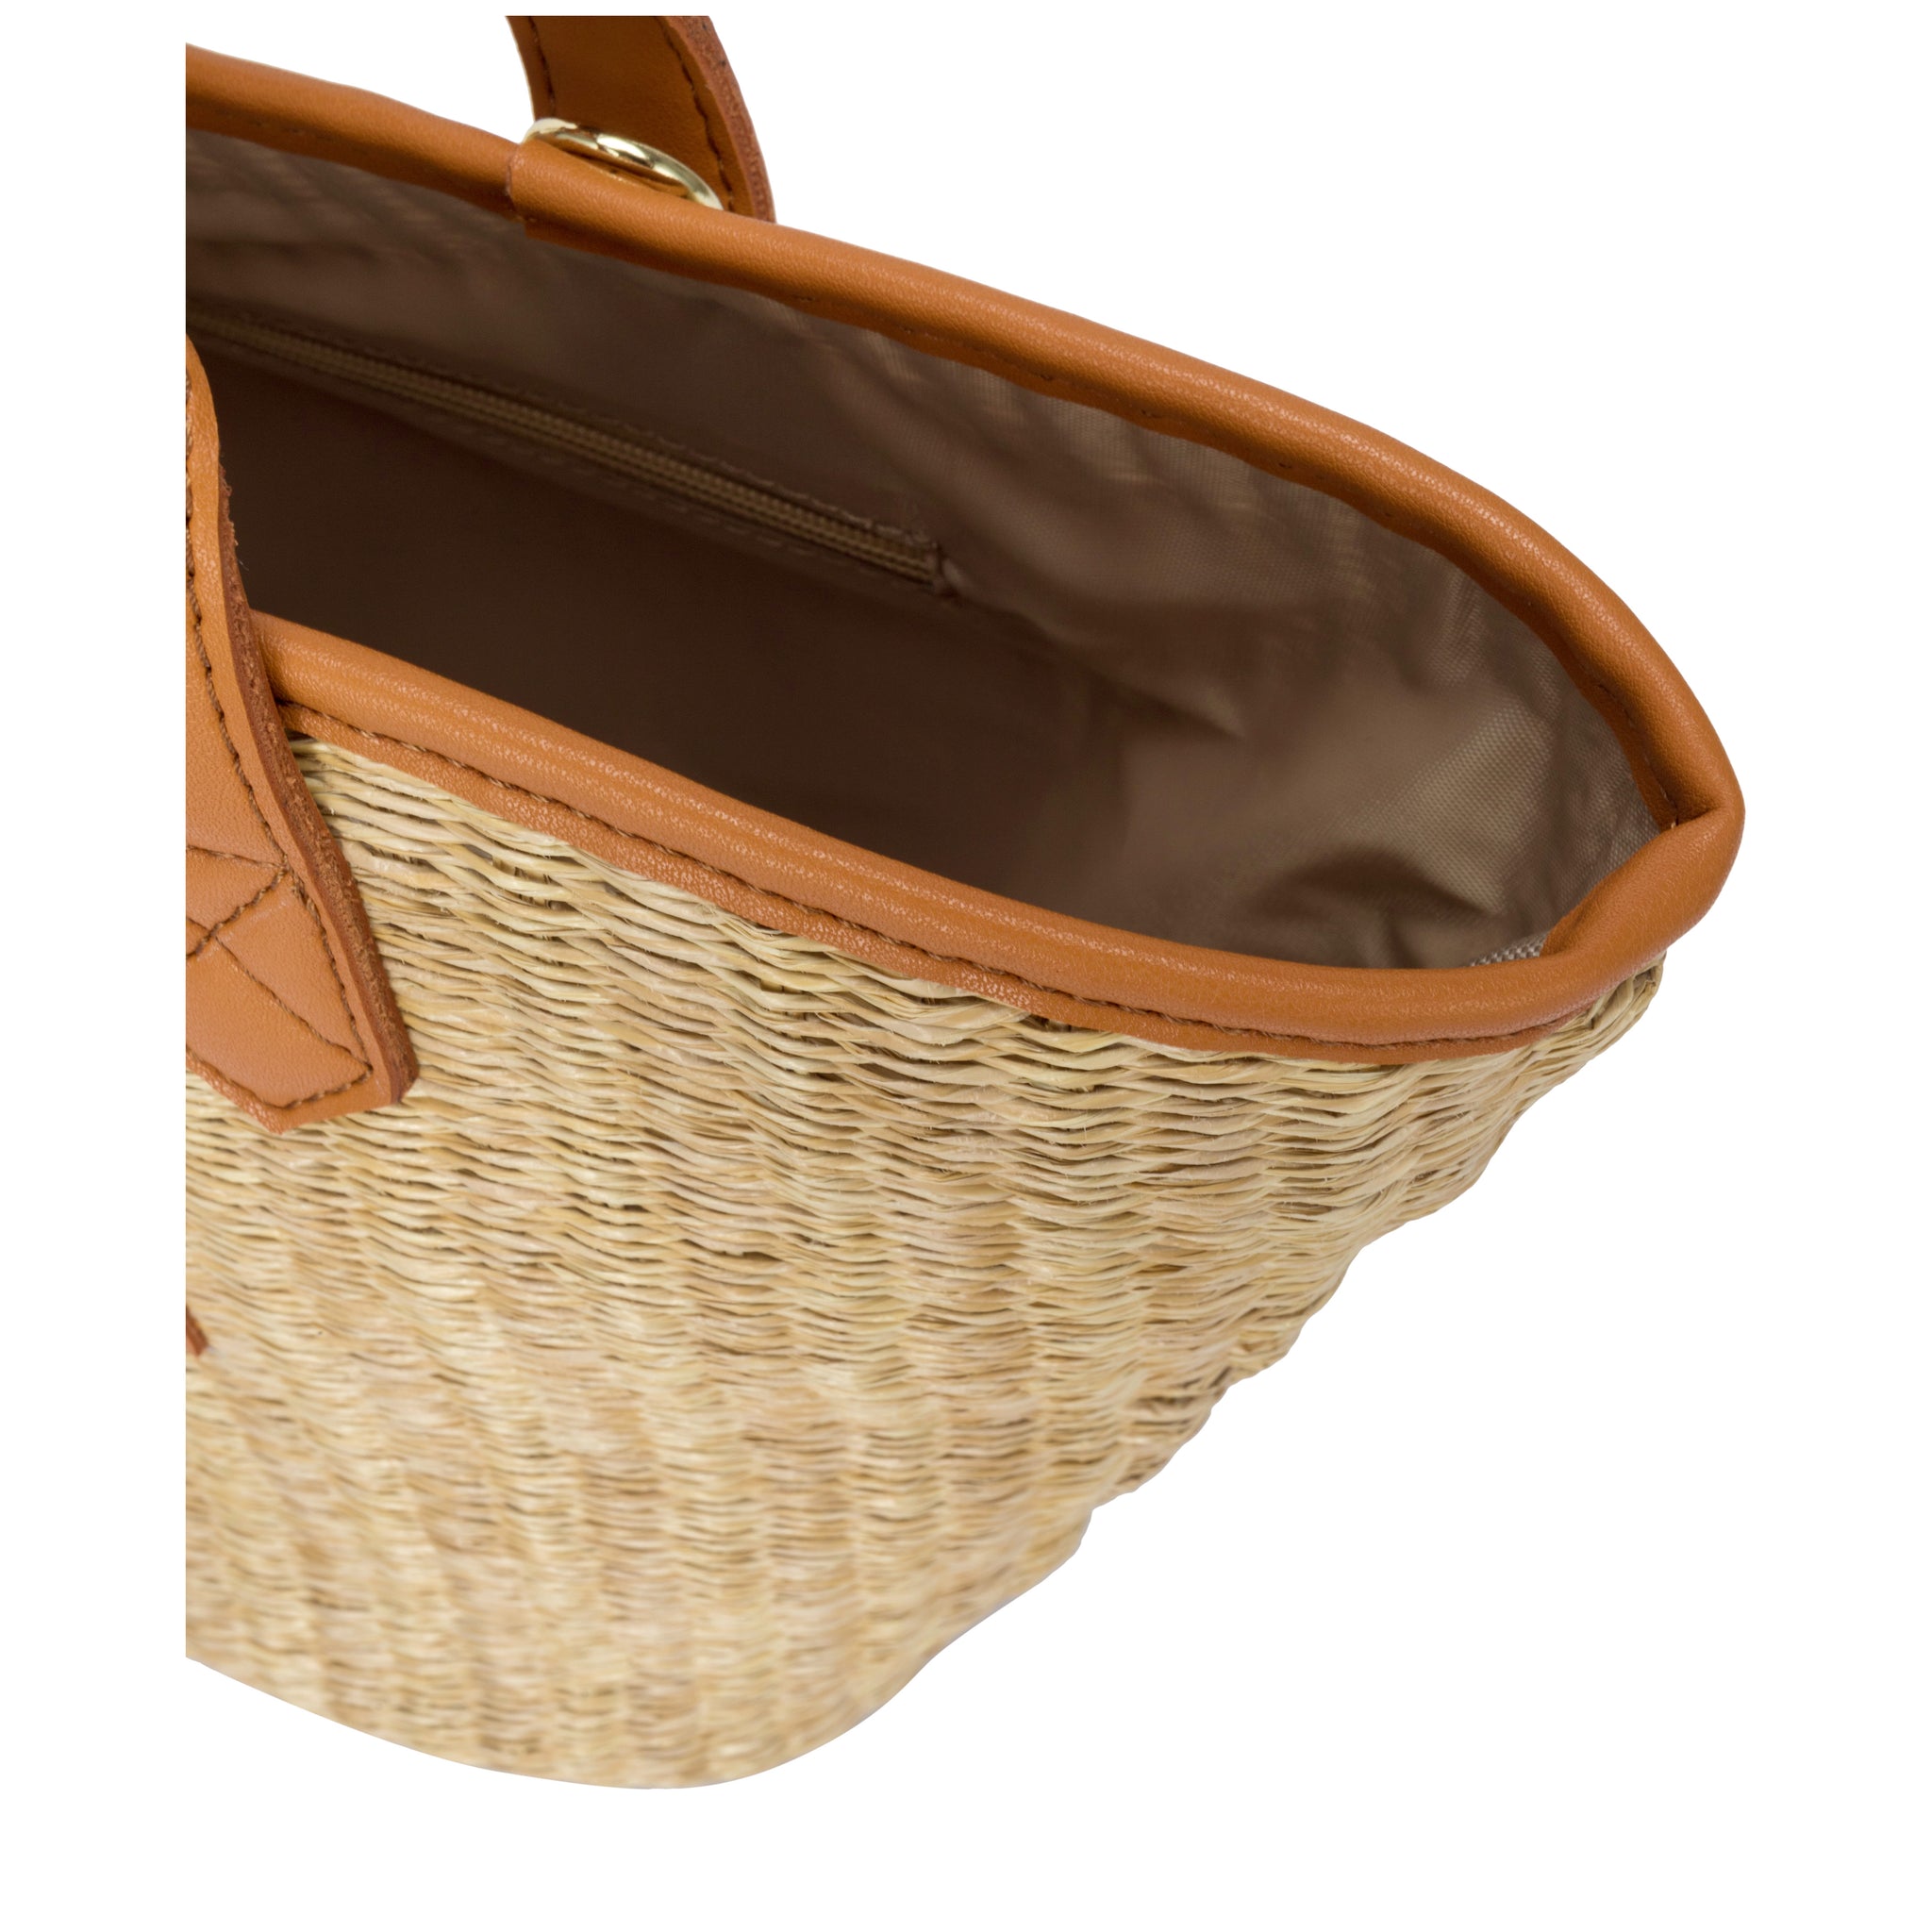 Every Other - Basket Bag Tan